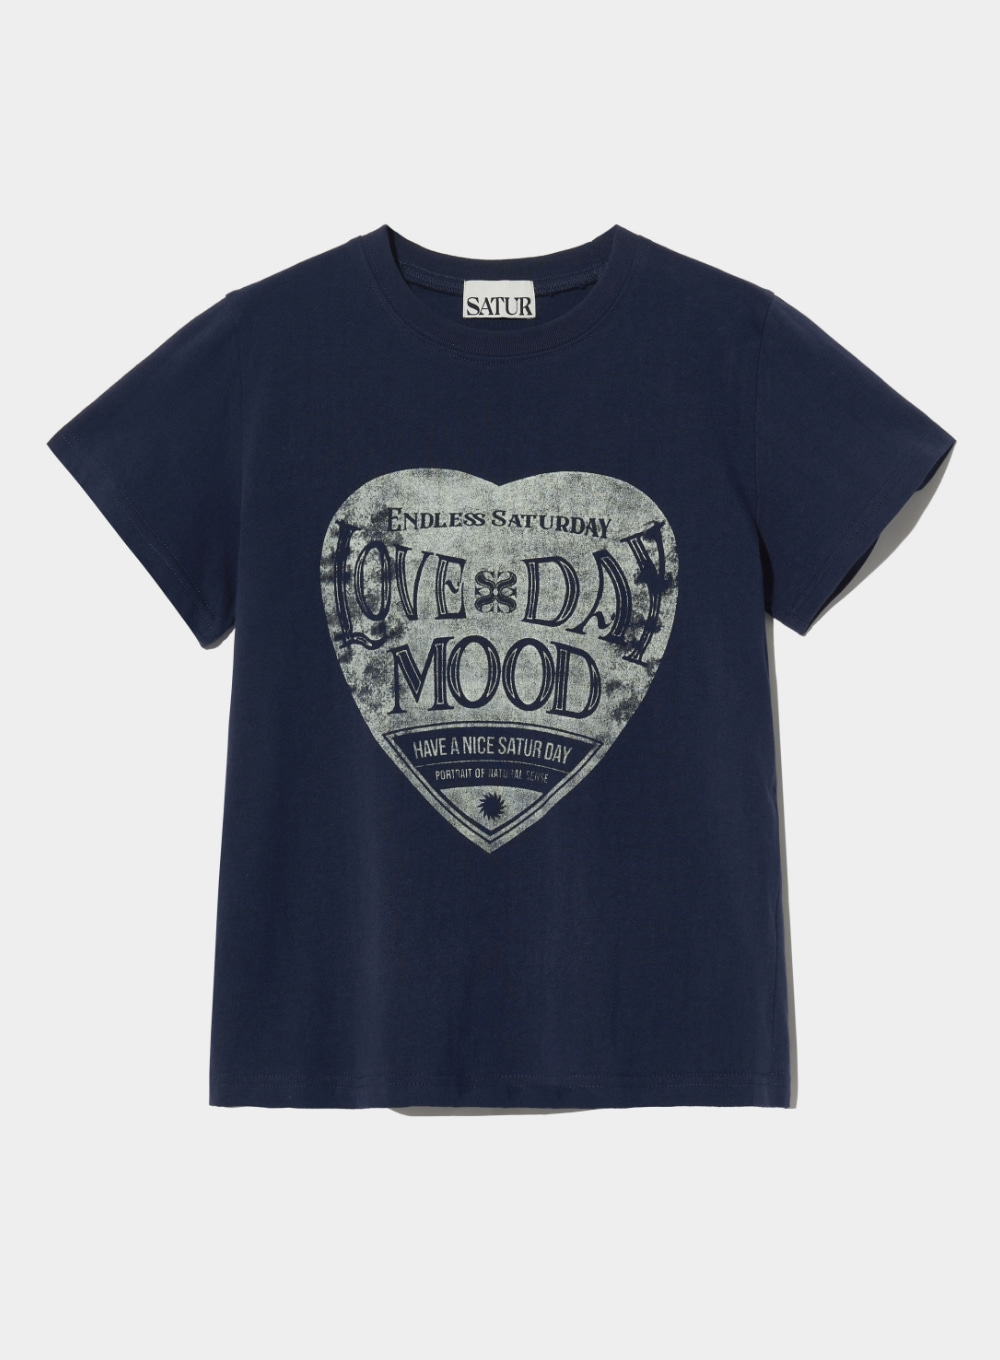 (W) Saturday Retro Mood Graphic T-Shirts - Navy Cream